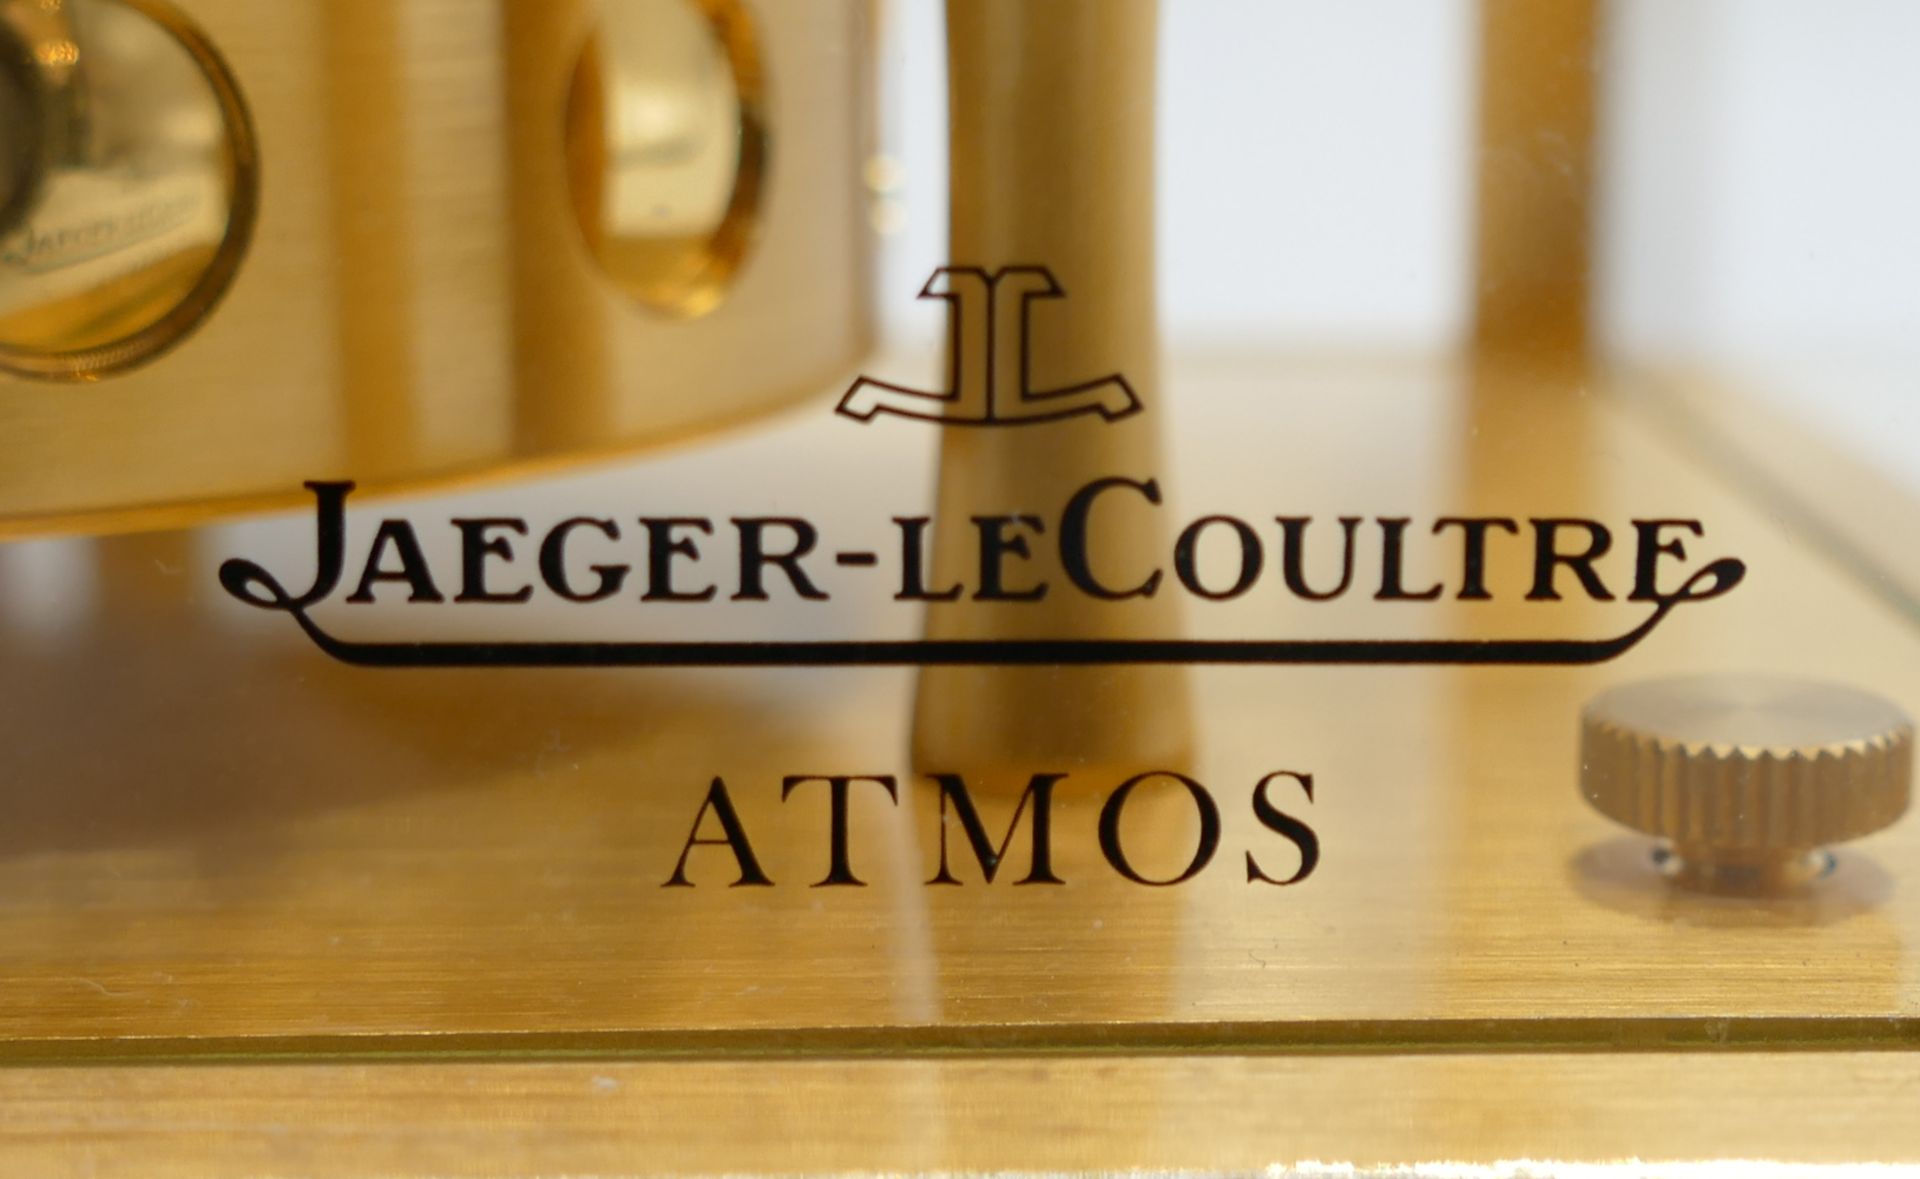 1 Tischuhr JAEGER LECOULTRE "Atmos" Schweiz, vergoldetes Messinggehäuse, - Image 3 of 6